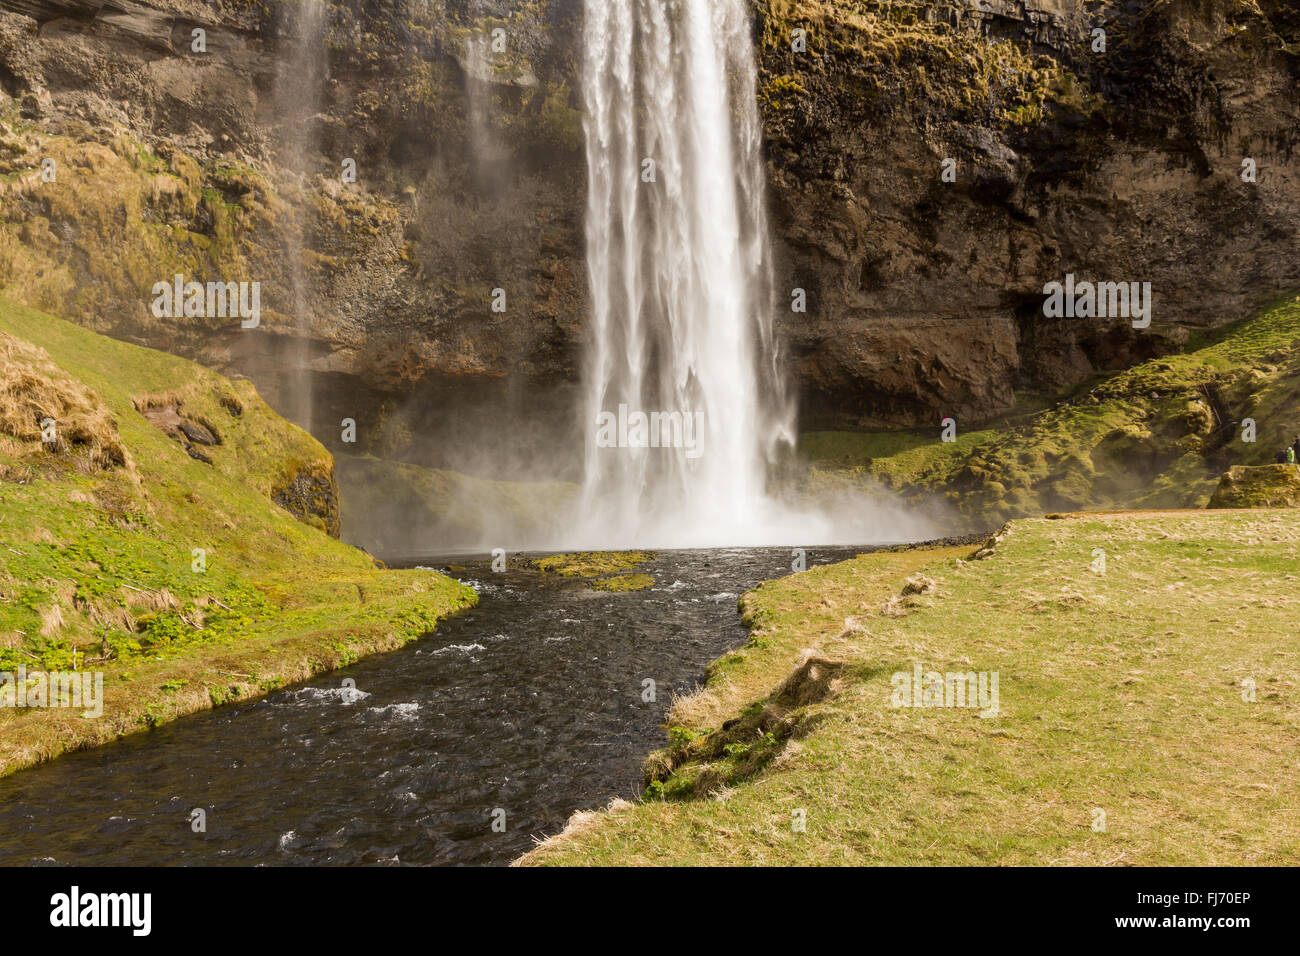 Cascade de seljalandsfoss en Islande Banque D'Images